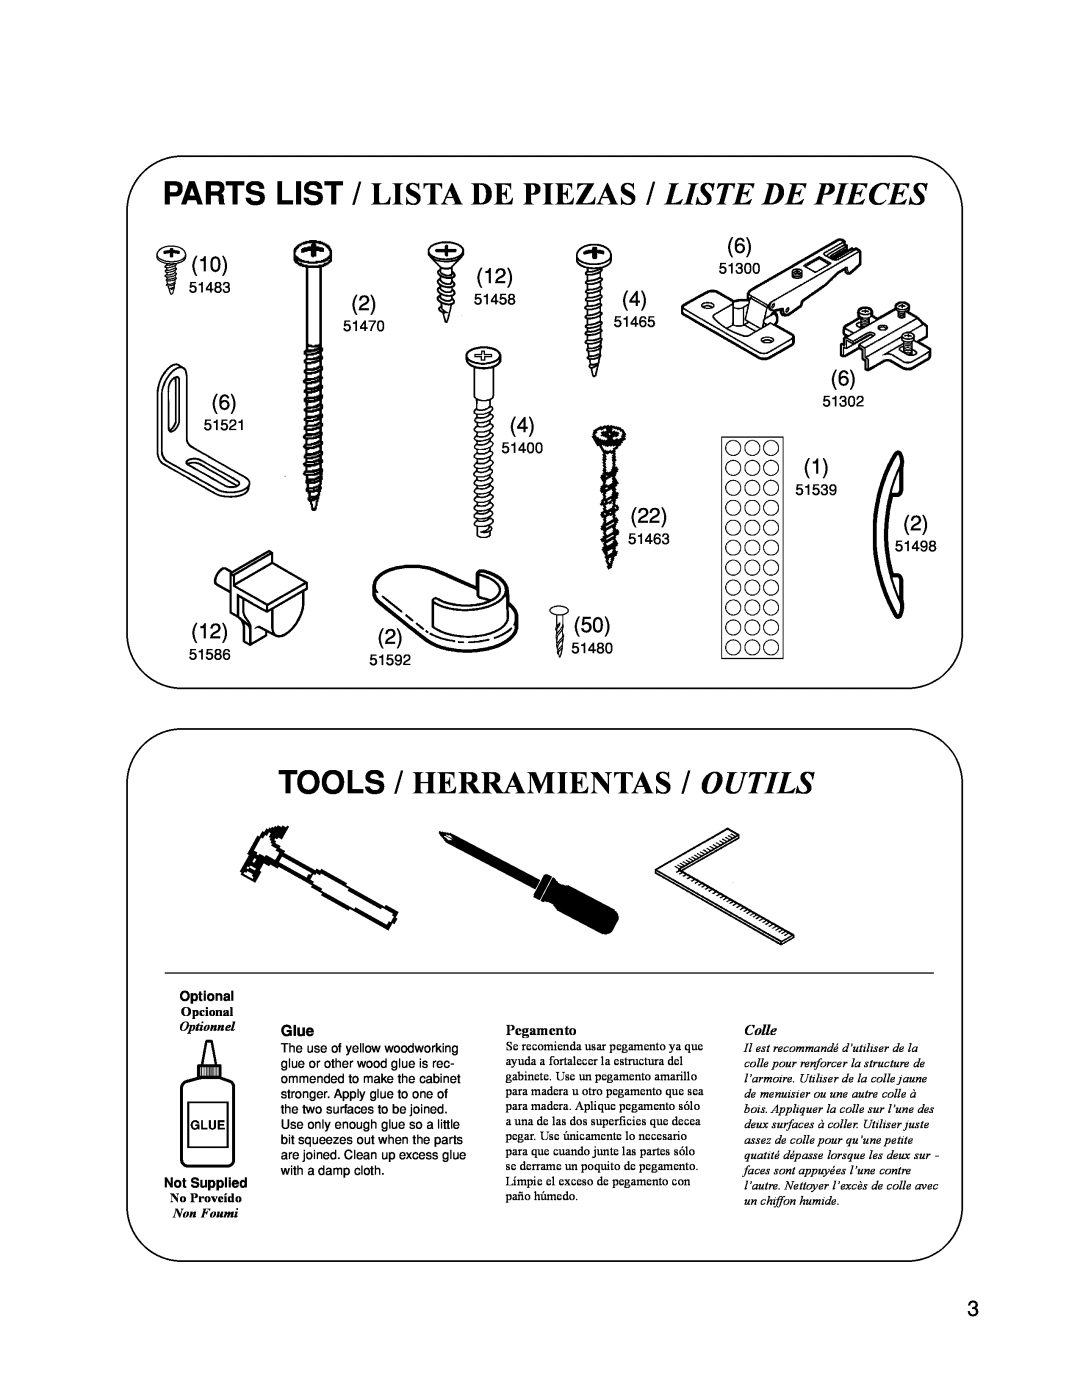 Closet Maid 12146 manual Tools / Herramientas / Outils, Parts List / Lista De Piezas / Liste De Pieces, Glue 